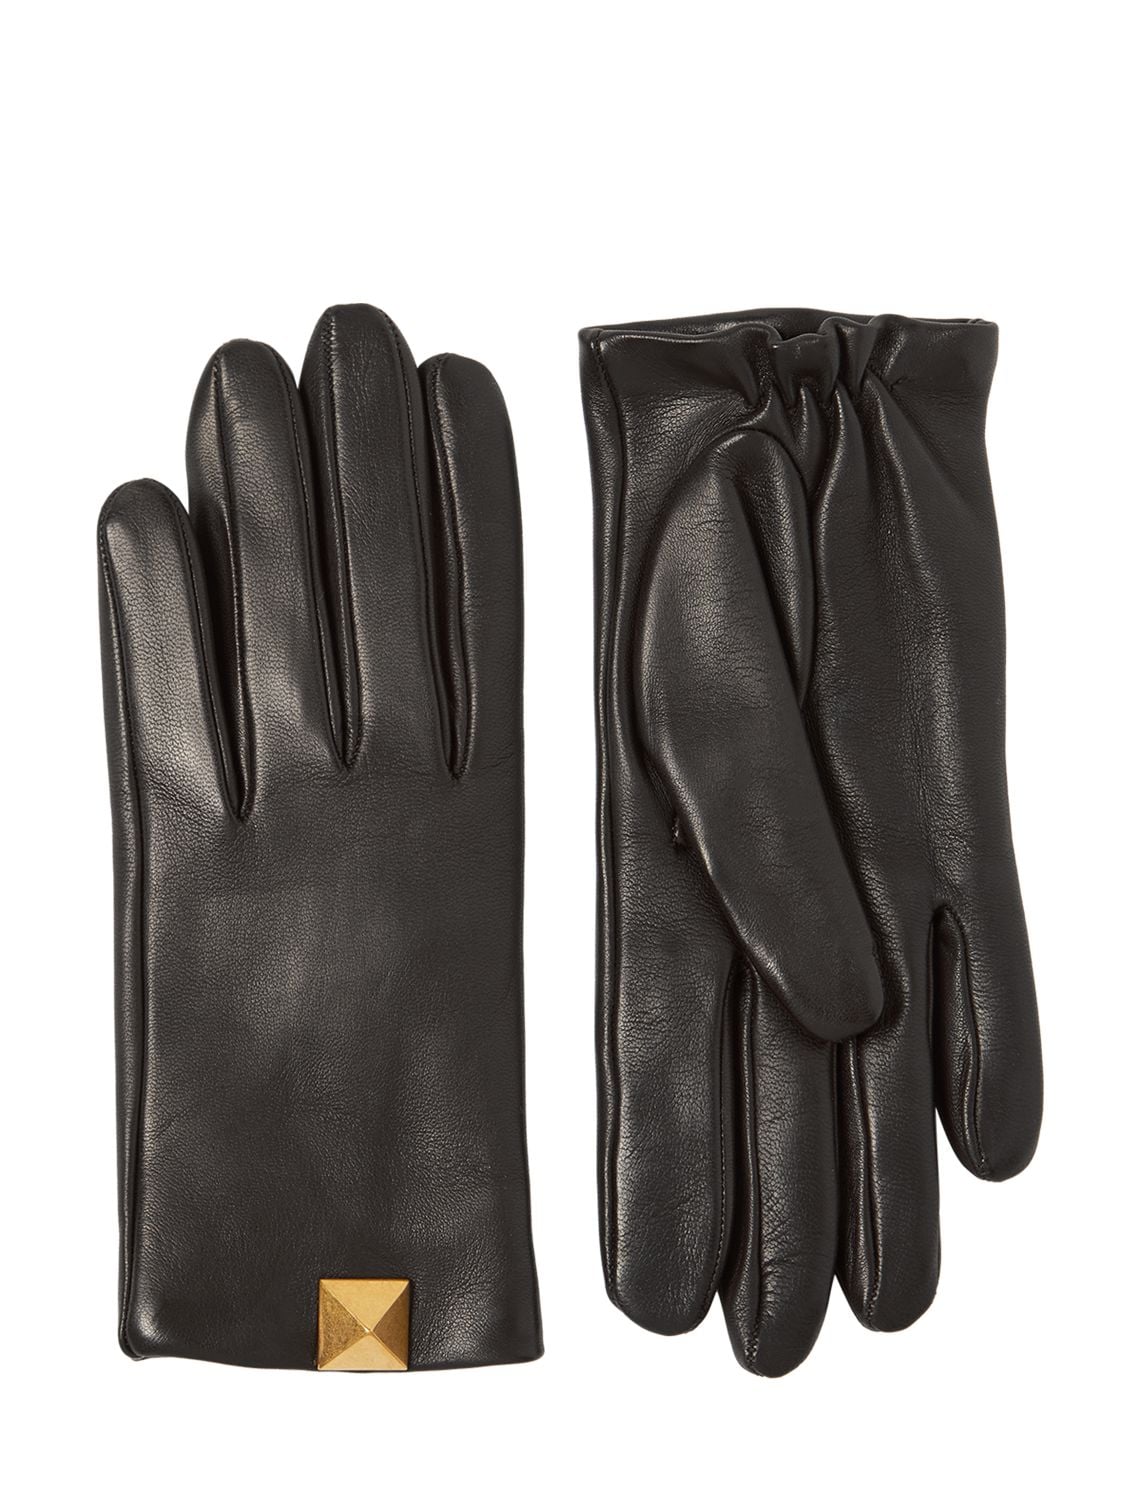 VALENTINO GARAVANI Roman Stud Leather Gloves